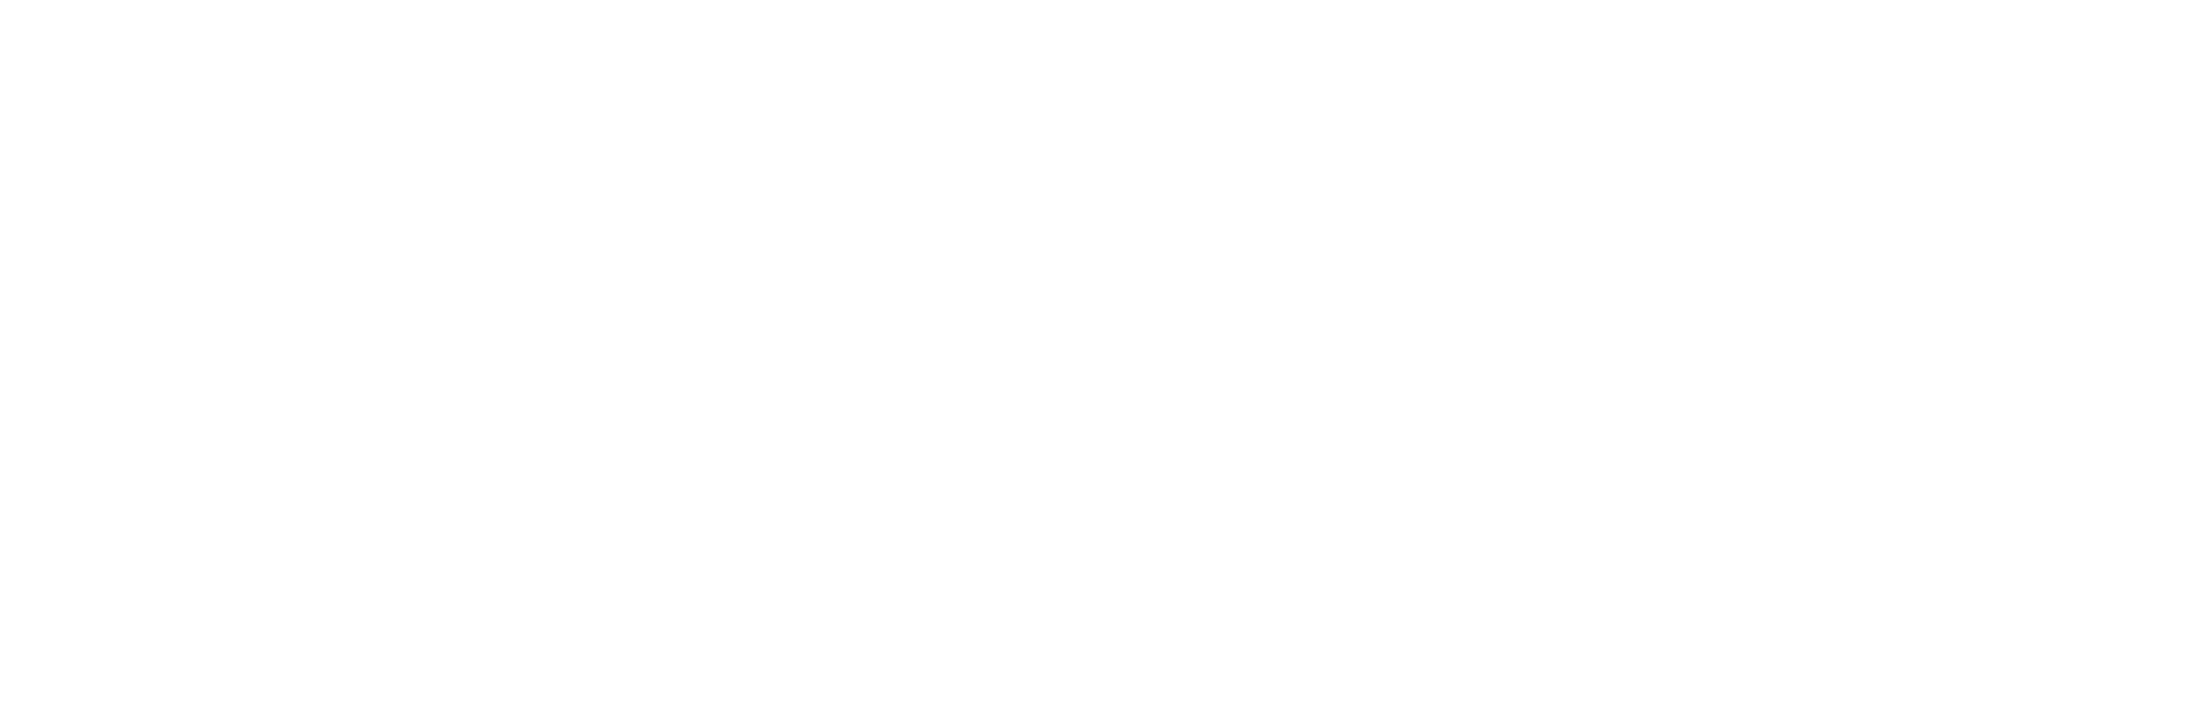 Logotipo de la empresa Telefónica sobre fondo negro.